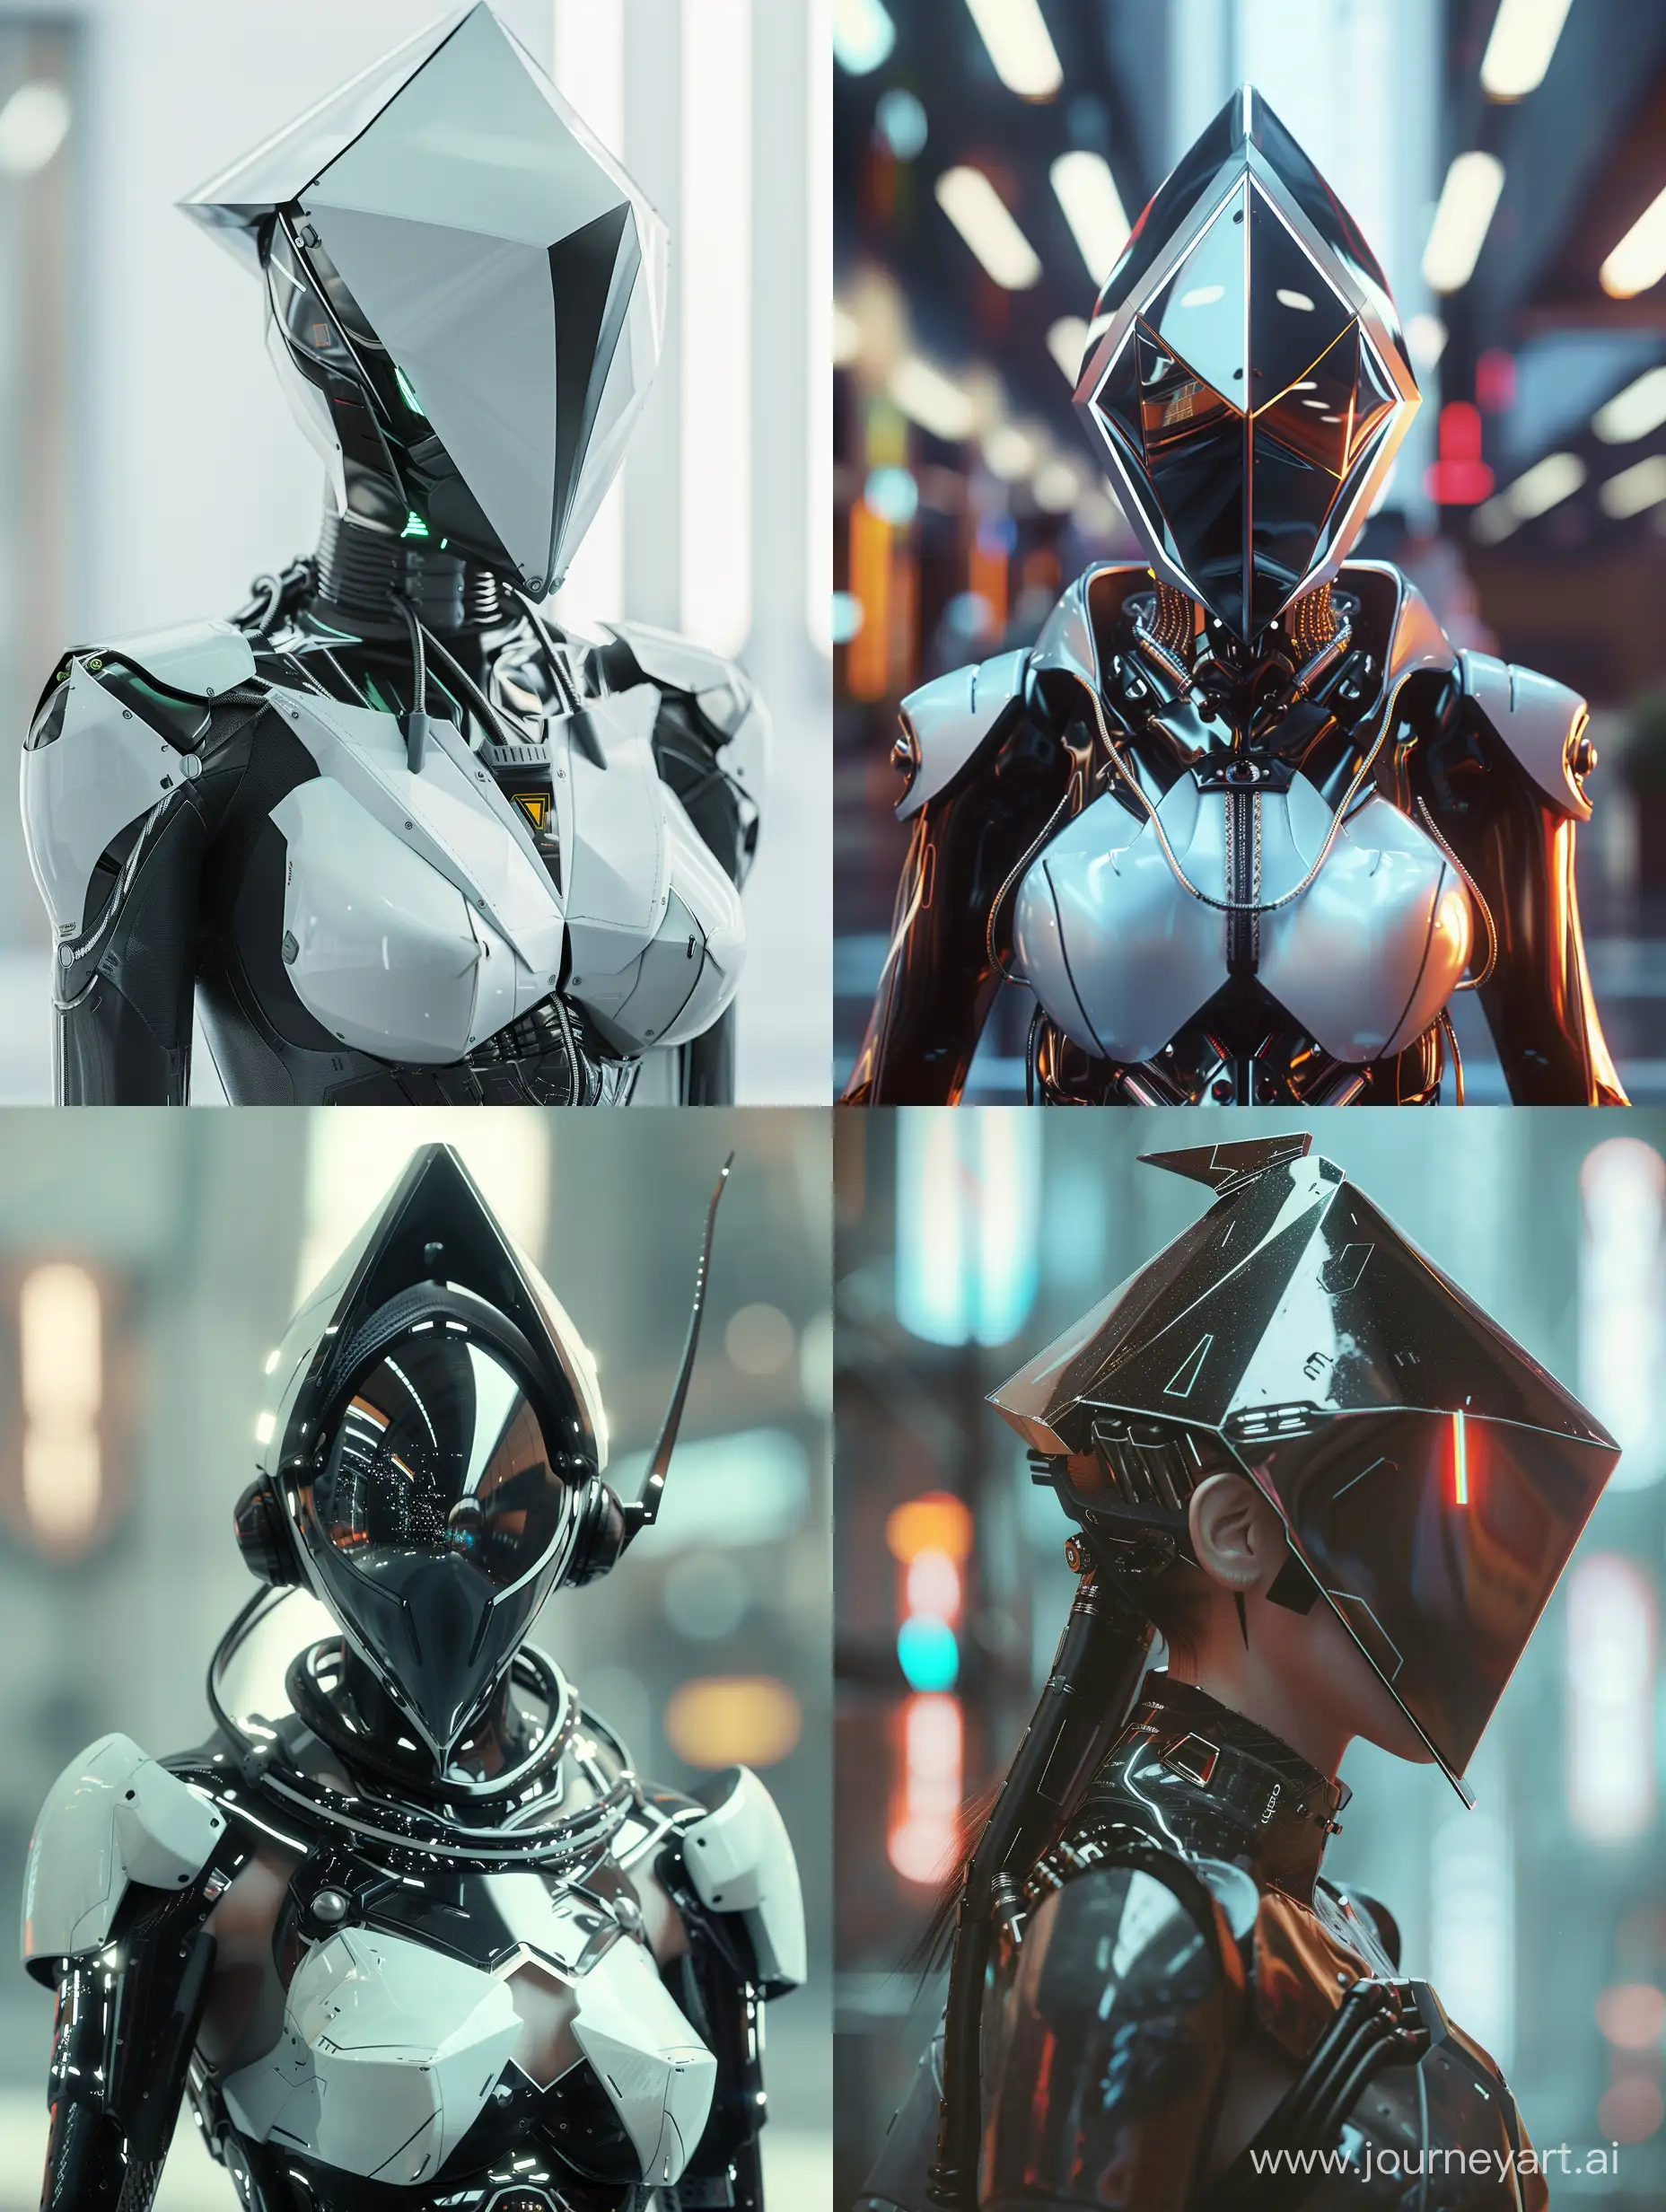 Futuristic-Female-Biroid-Rockstar-in-Triangular-Armor